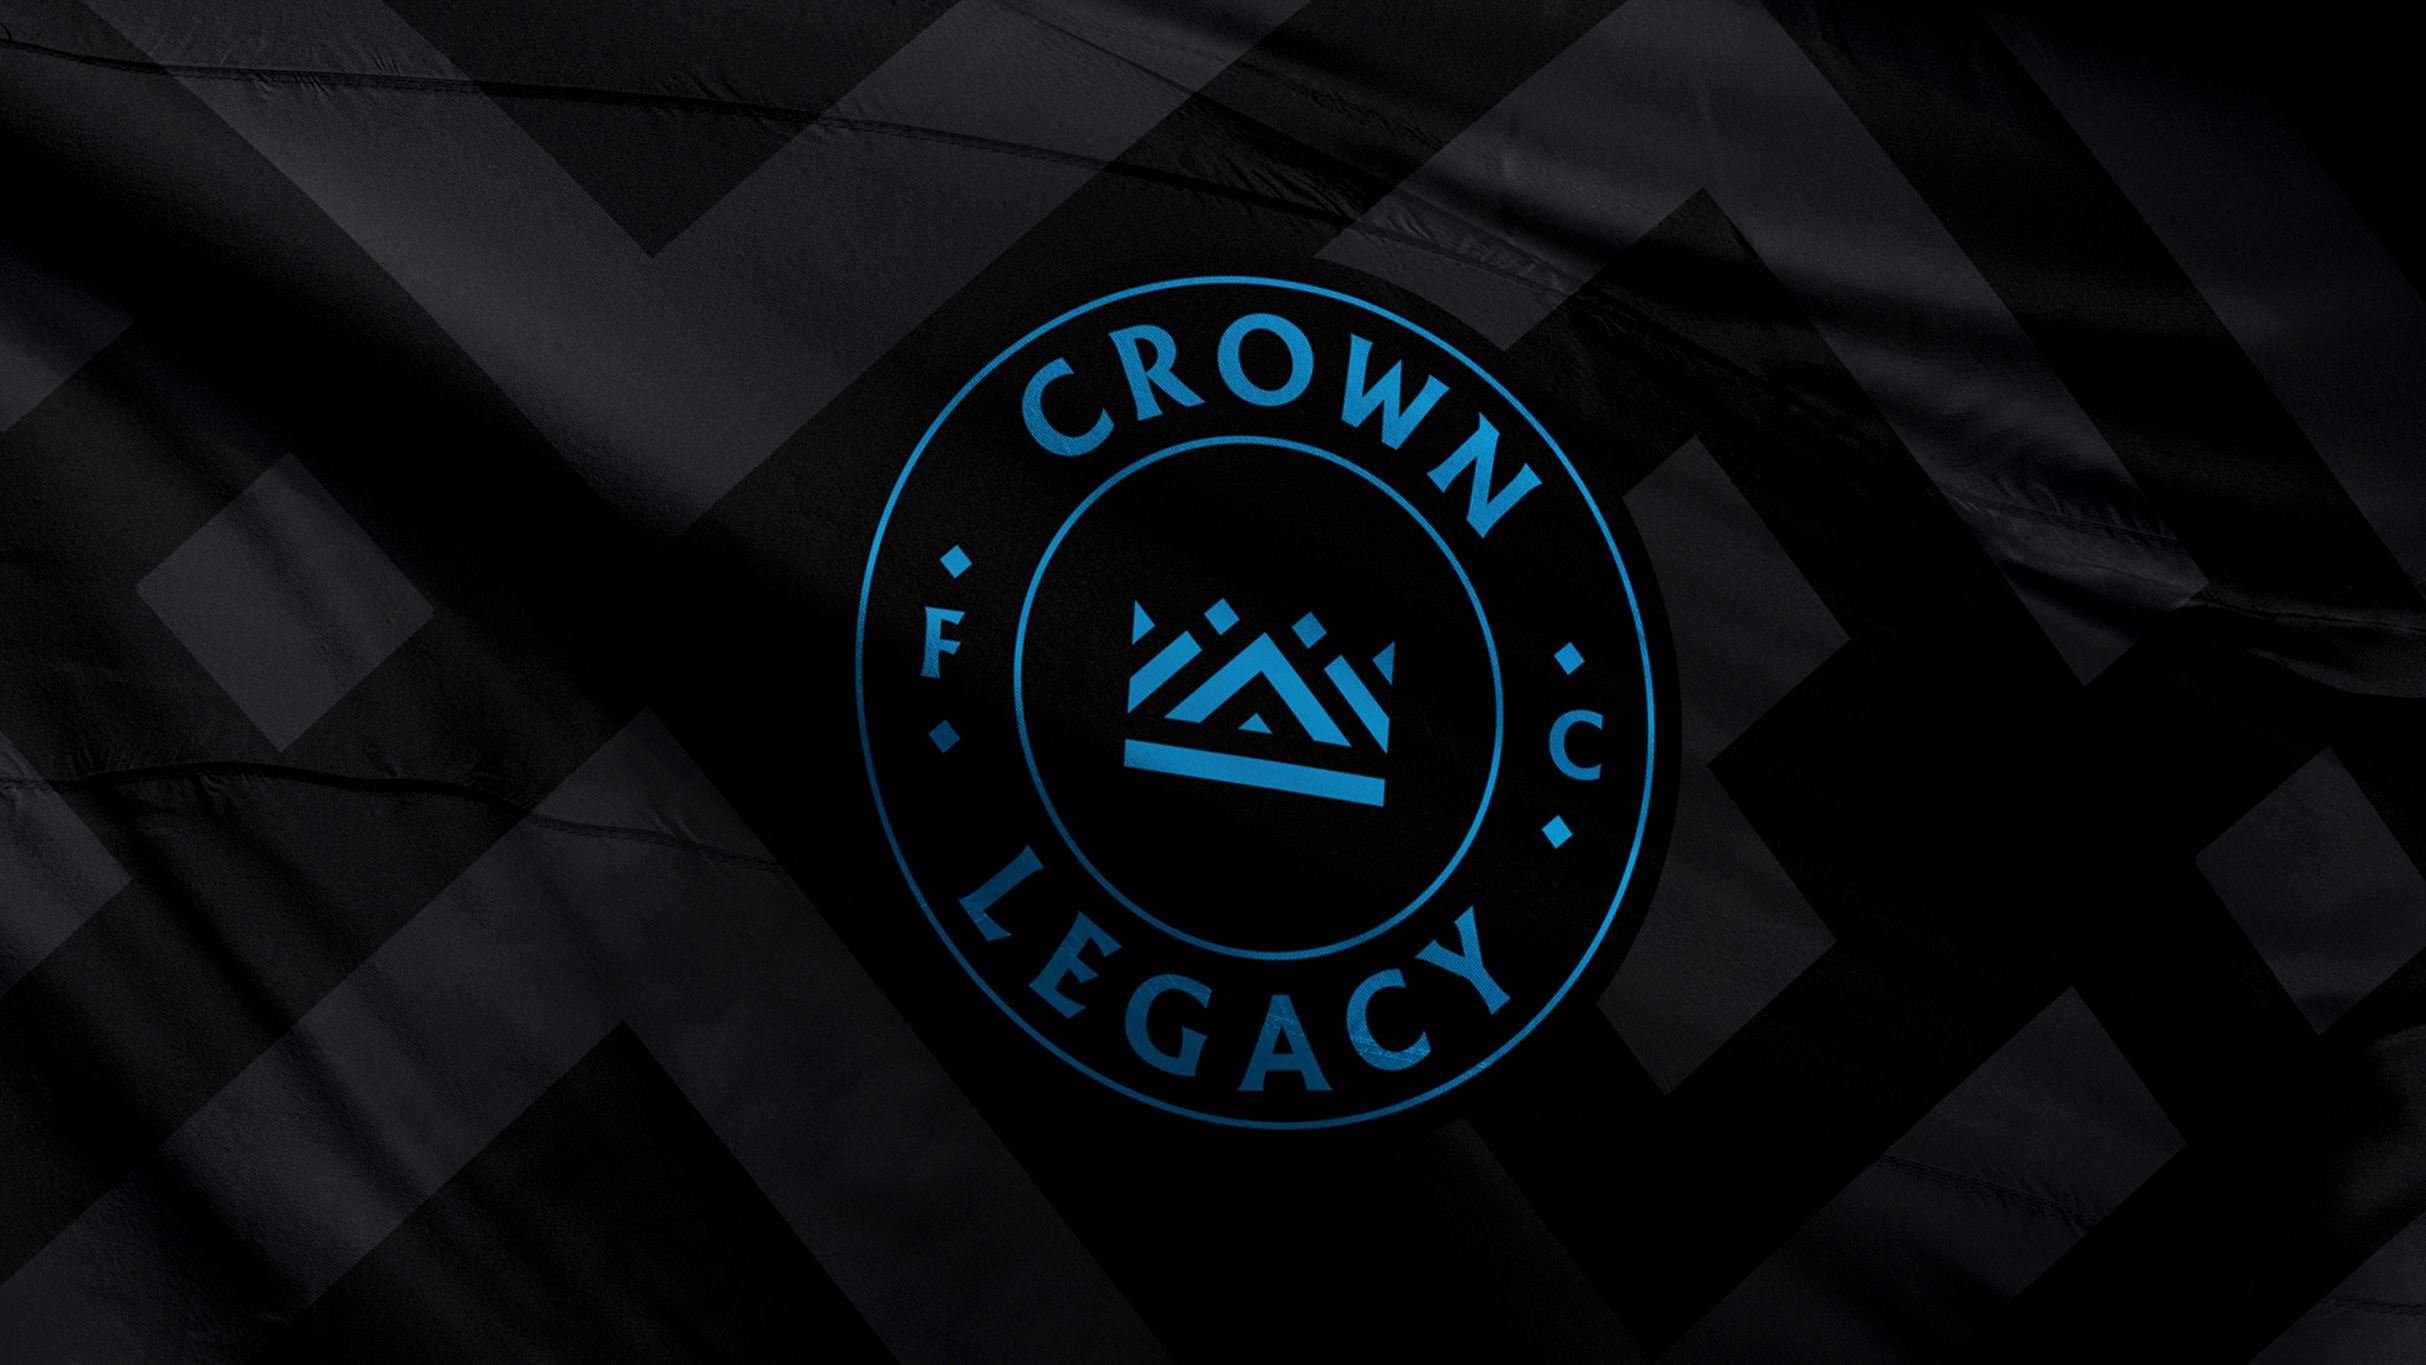 Crown Legacy FC vs. Toronto FC II